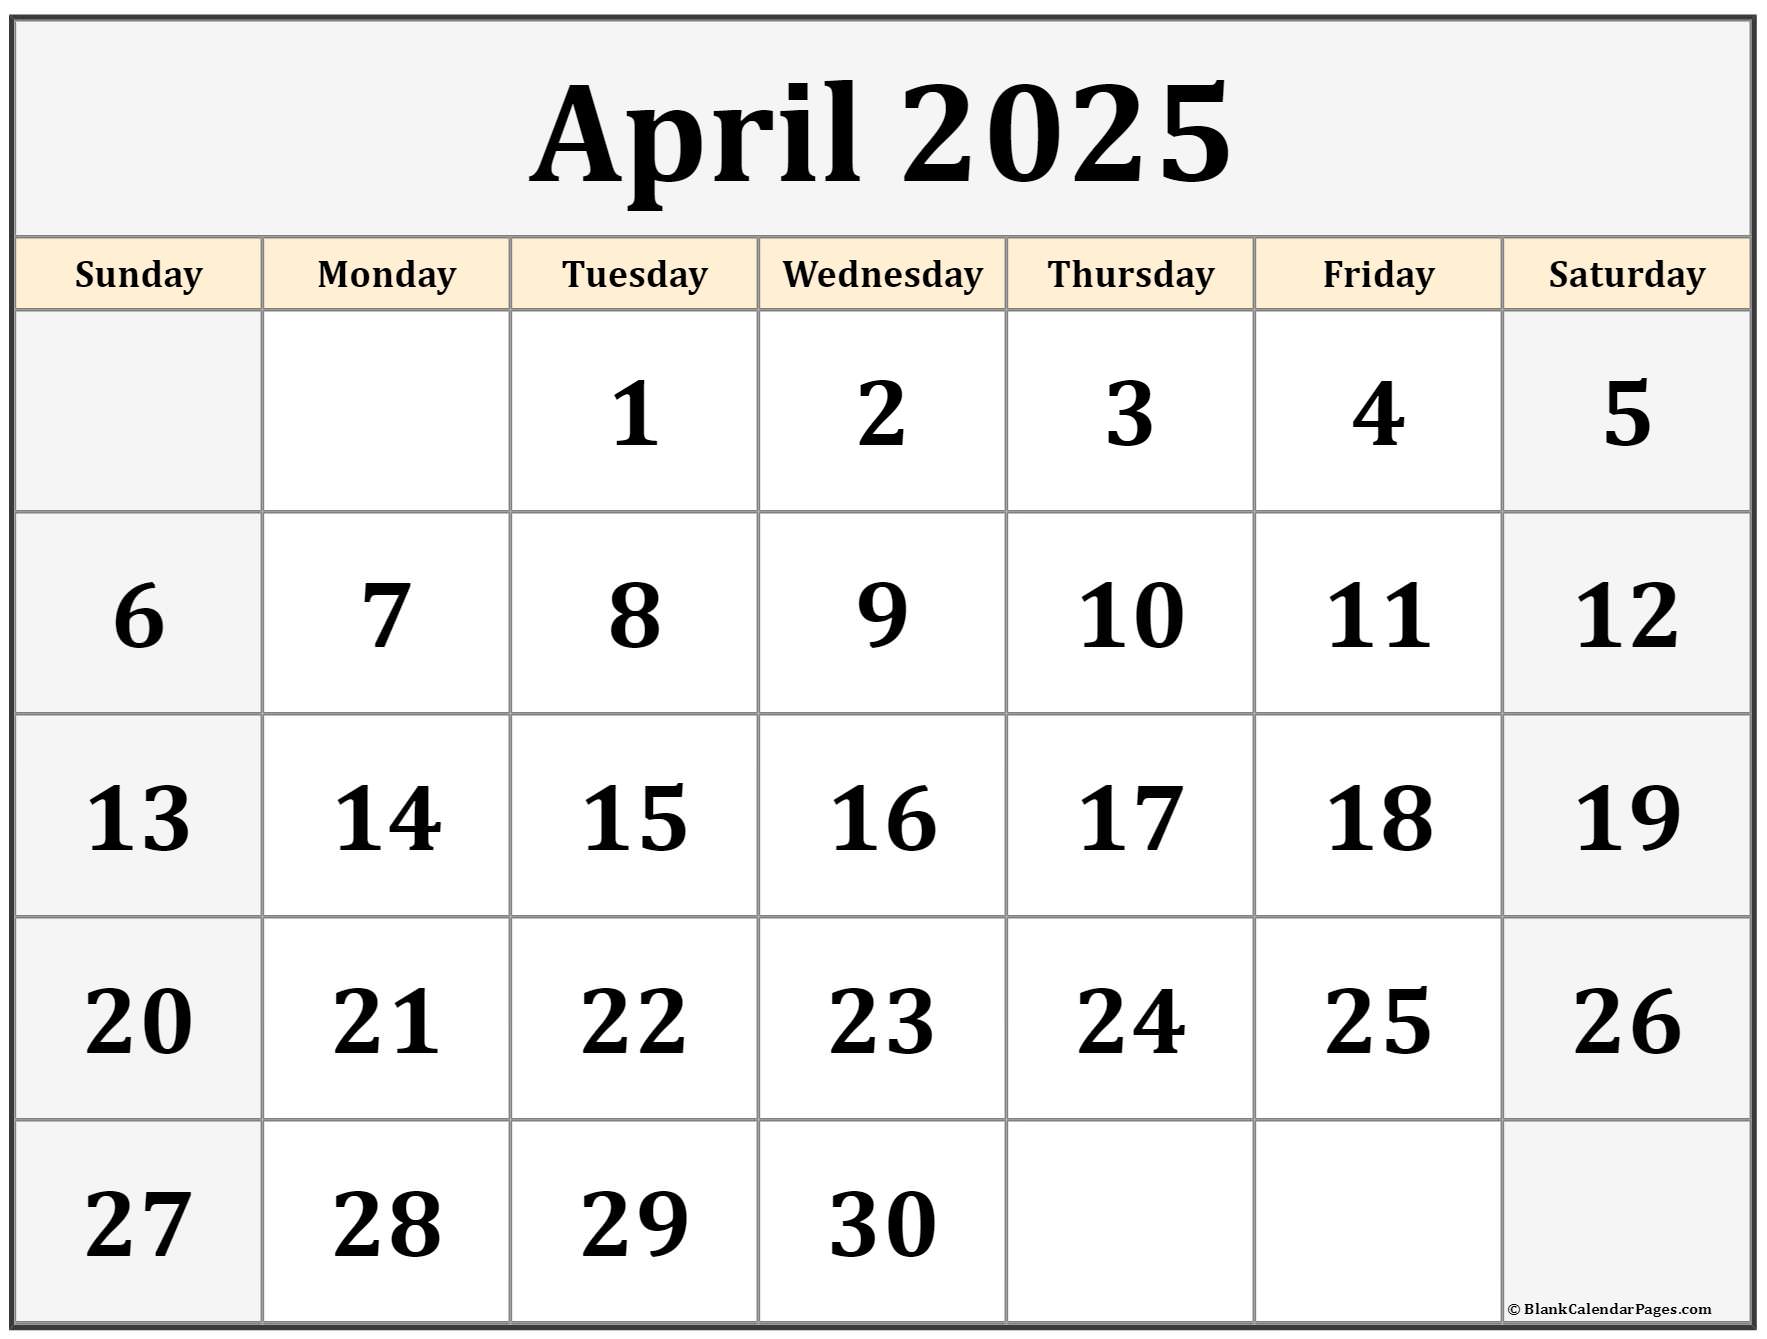 April 2025 calendar  free printable calendar